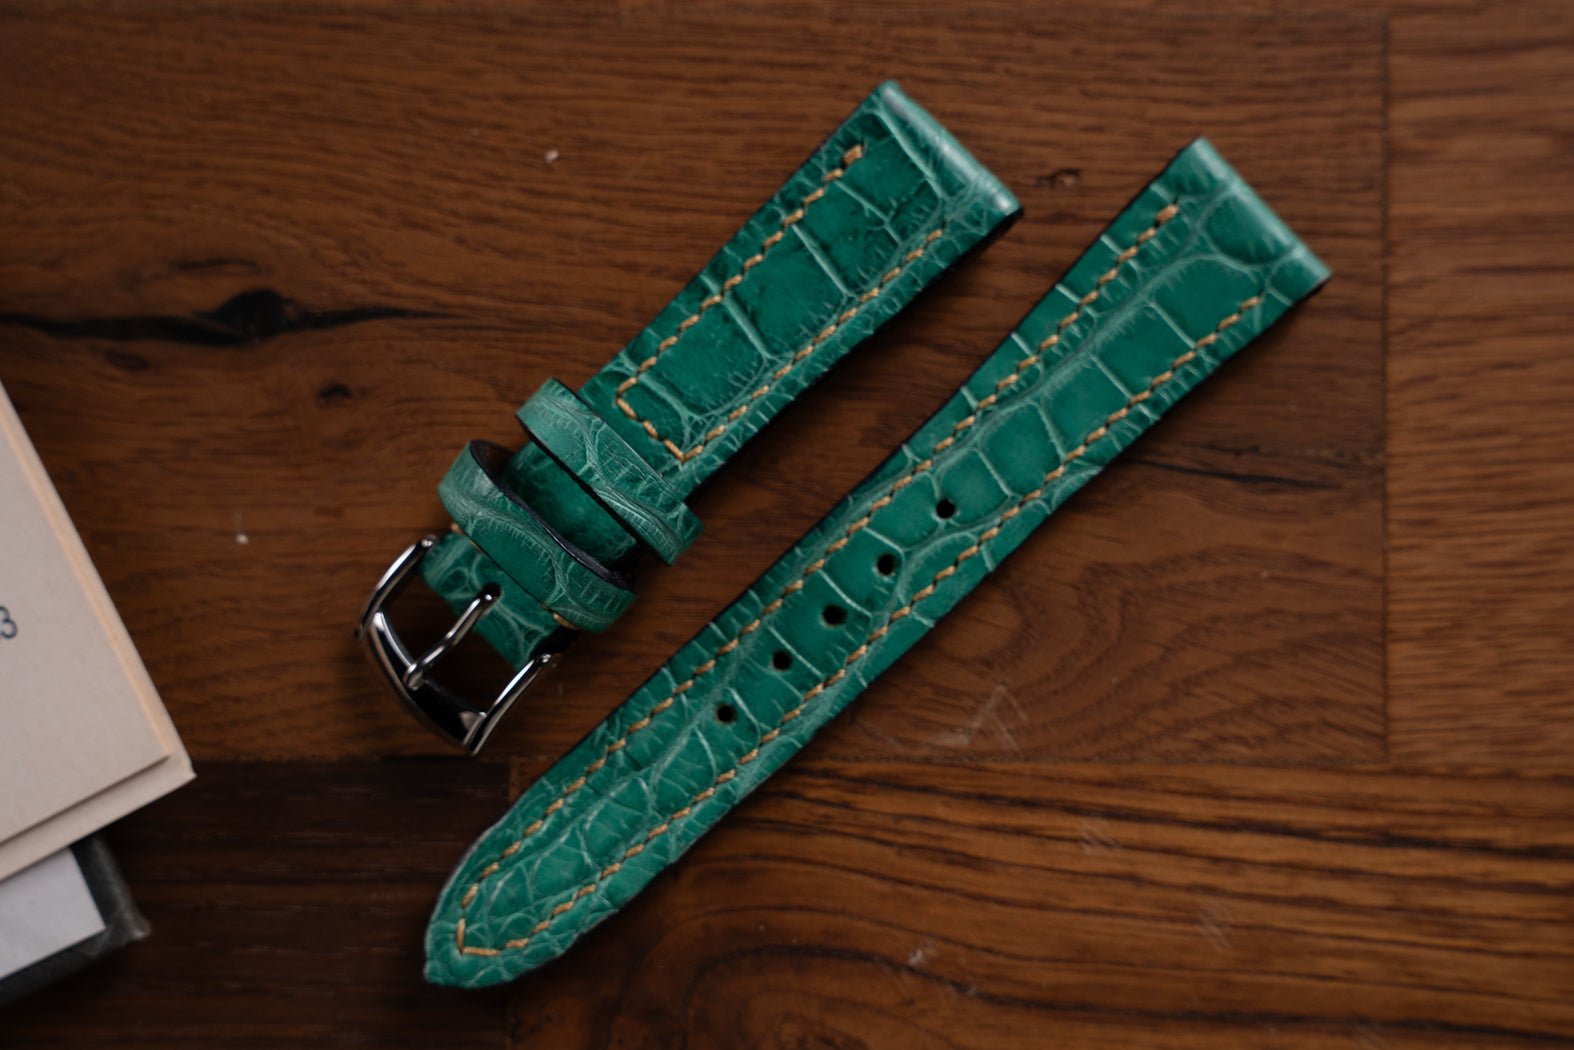 Bosphorus LeatherAlligator Watch Strap - Mint 02 - In Stock!